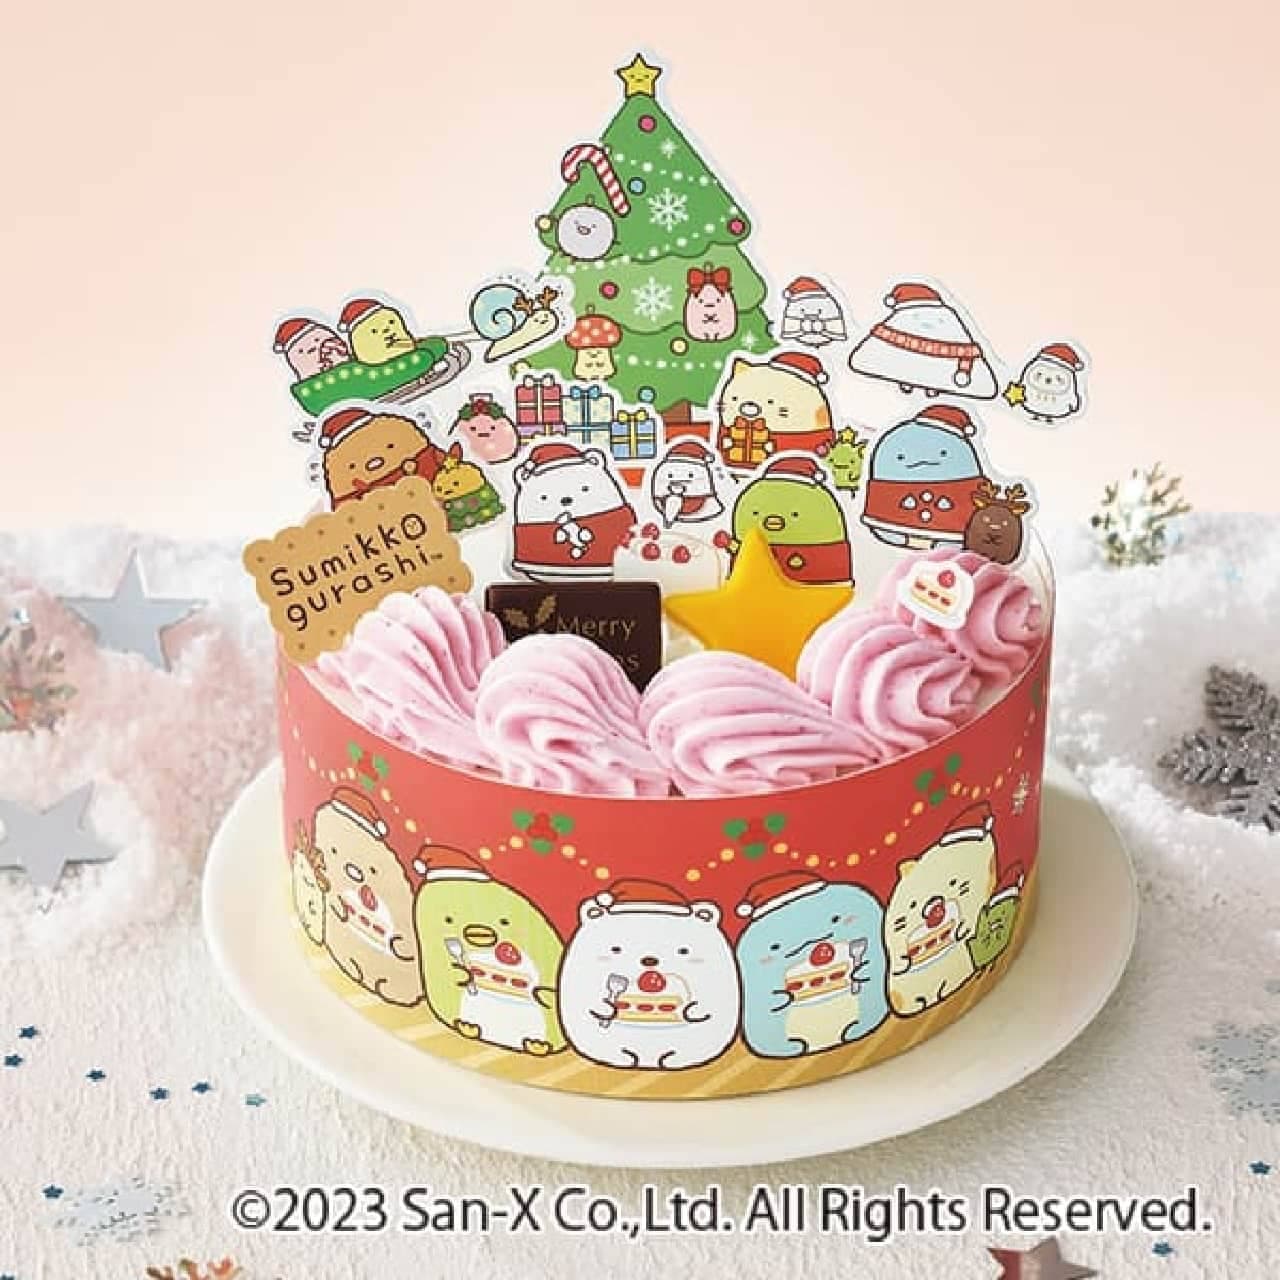 FamilyMart "Sumikko Gurashi Kazakete Fun Christmas Cake